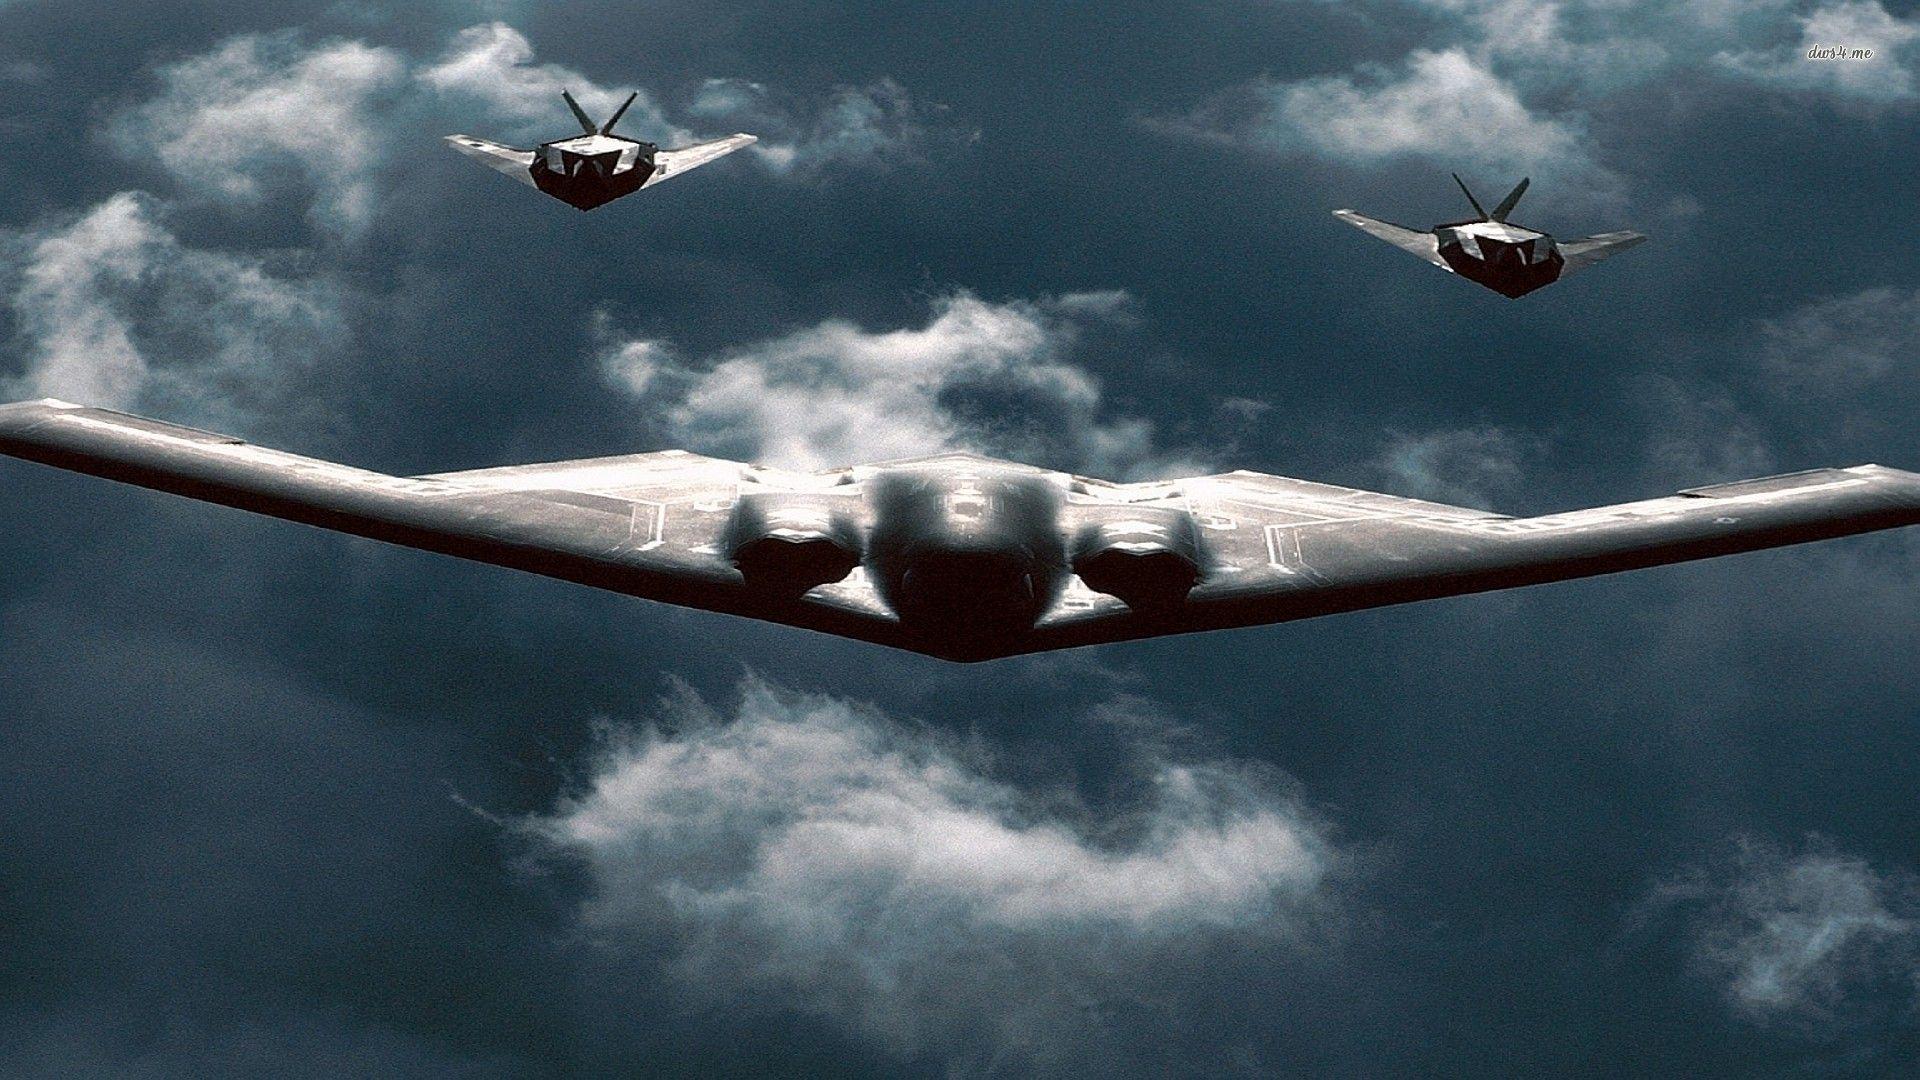 Lockheed F117 Nighthawk wallpaper free. Technology: Military